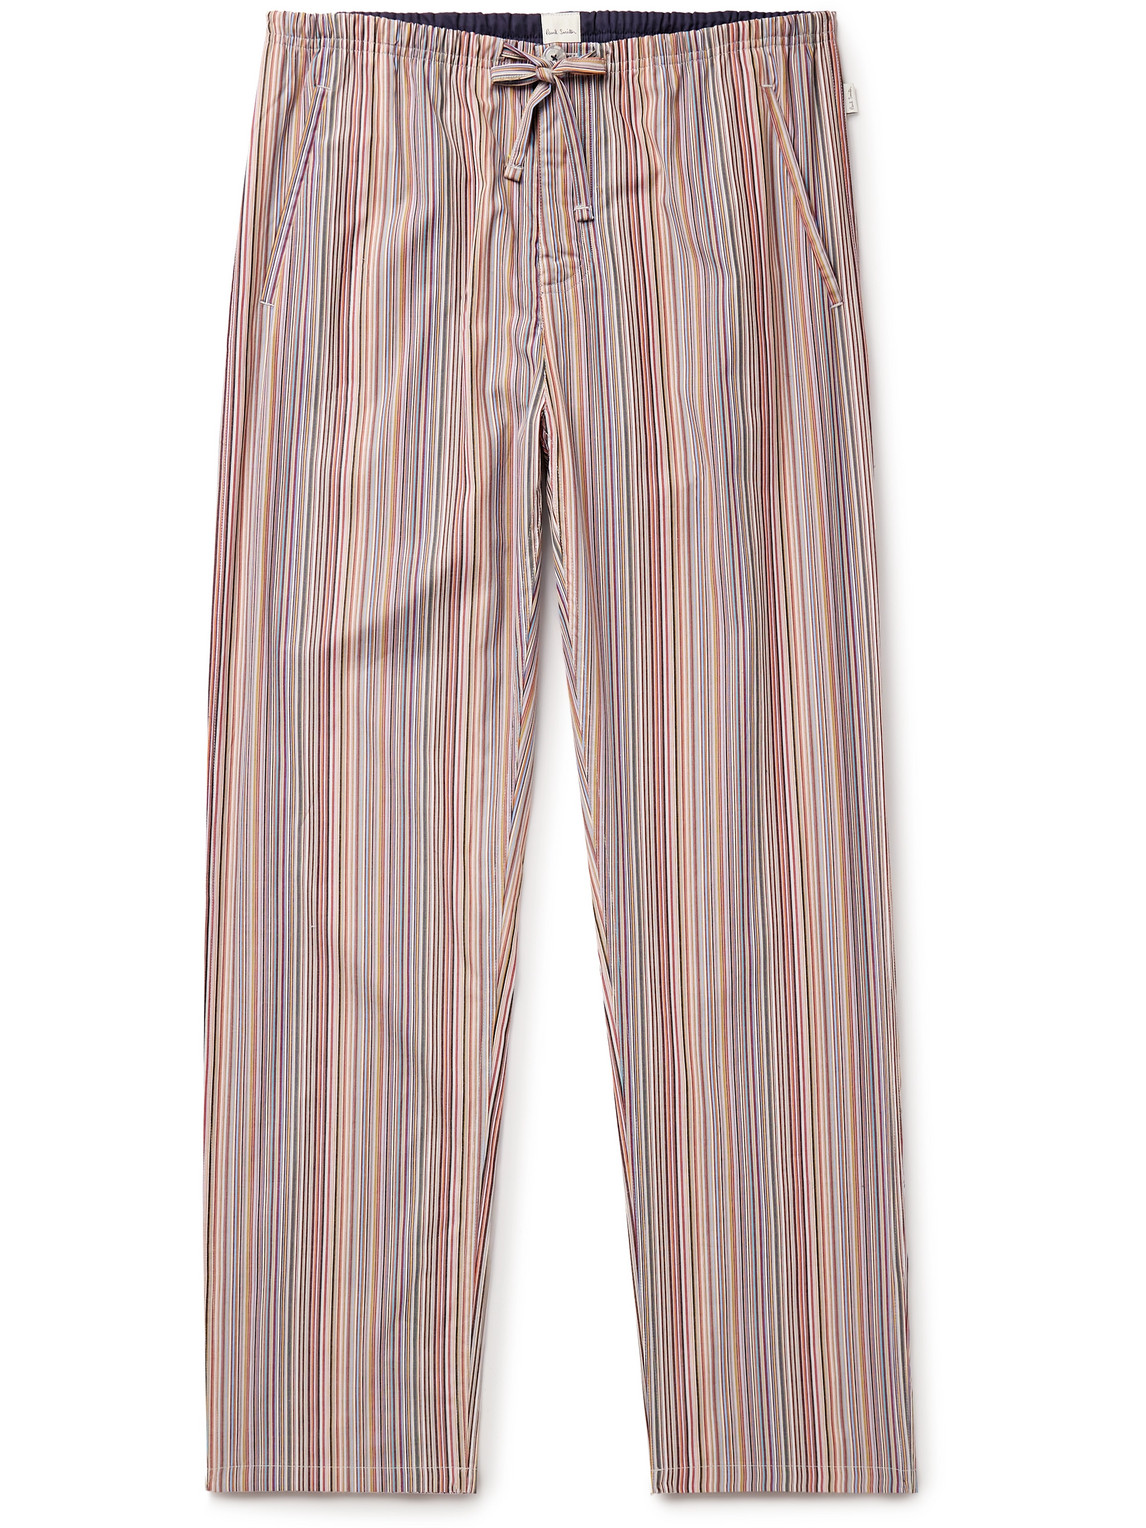 Paul Smith Striped Cotton Pyjama Trousers In Multi